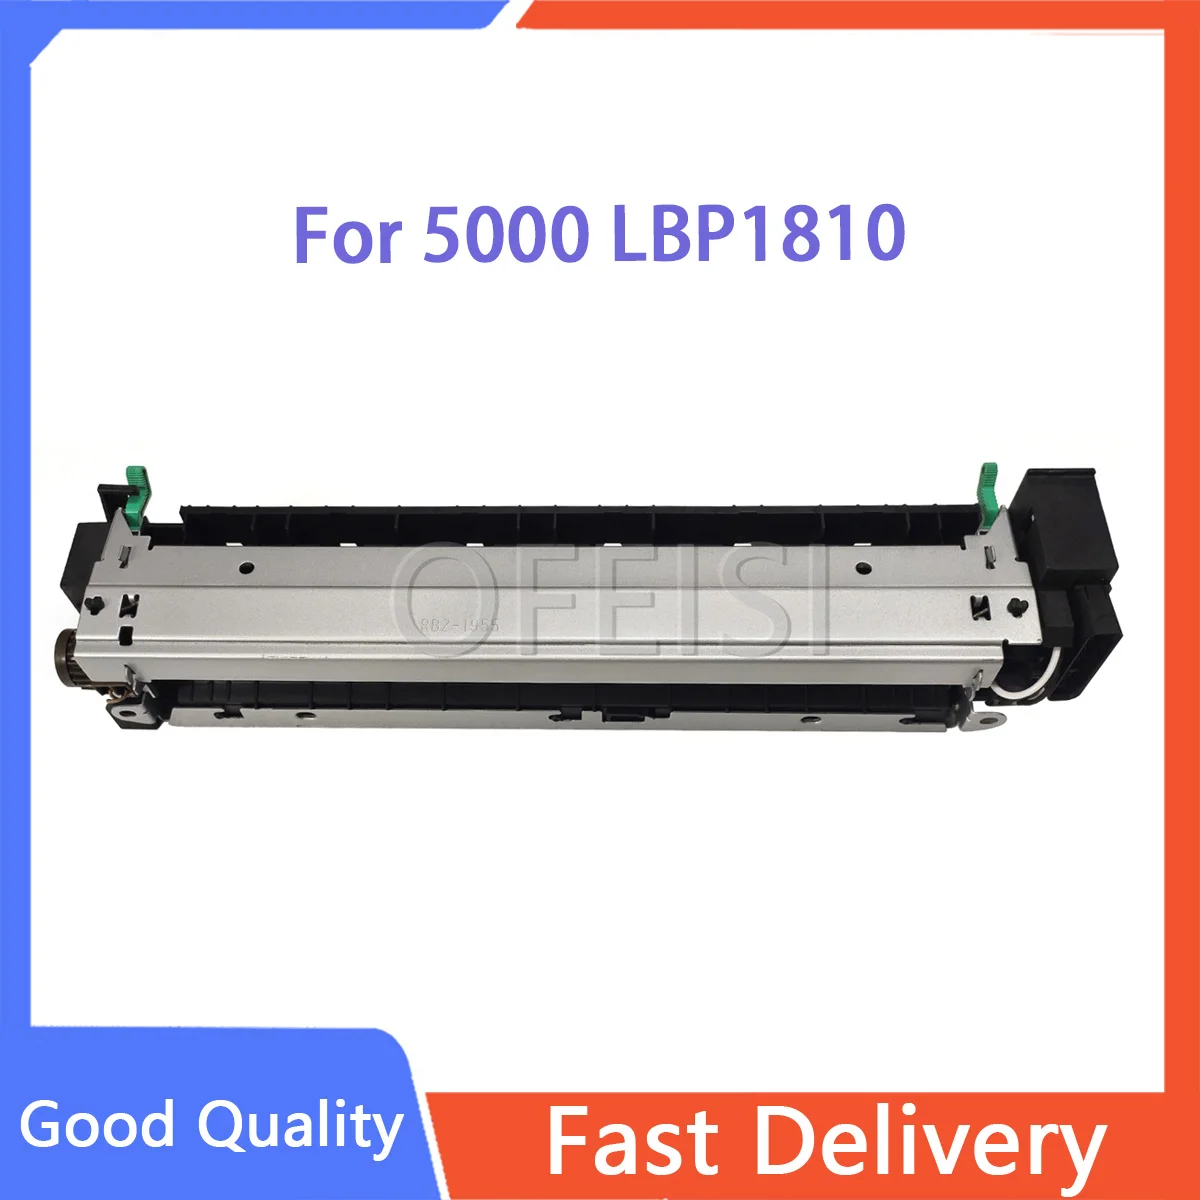 

Compatible new for HP5000 Fuser Assembly RG5-3528 RG5-3528-000 RG5-3528-000CN RG5-3529 RG5-3529-000 RG5-3529-000CN printer part